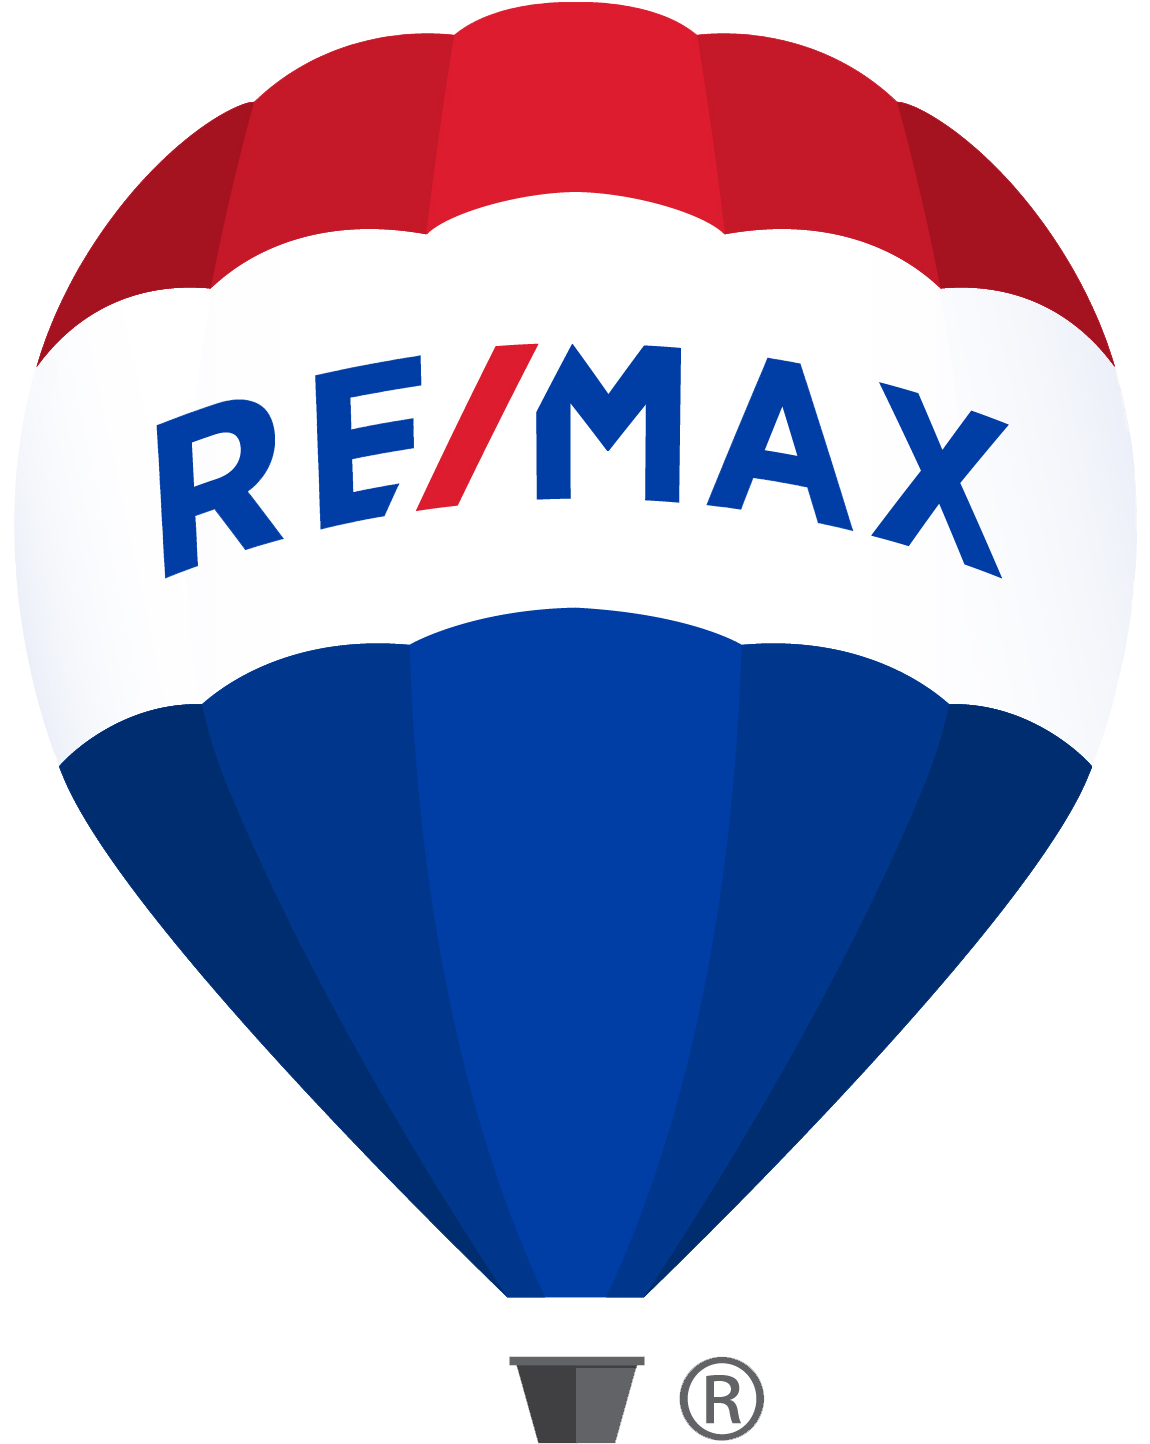 1850 Wood Duck Way, Mls - Remax Logo (1149x1460)